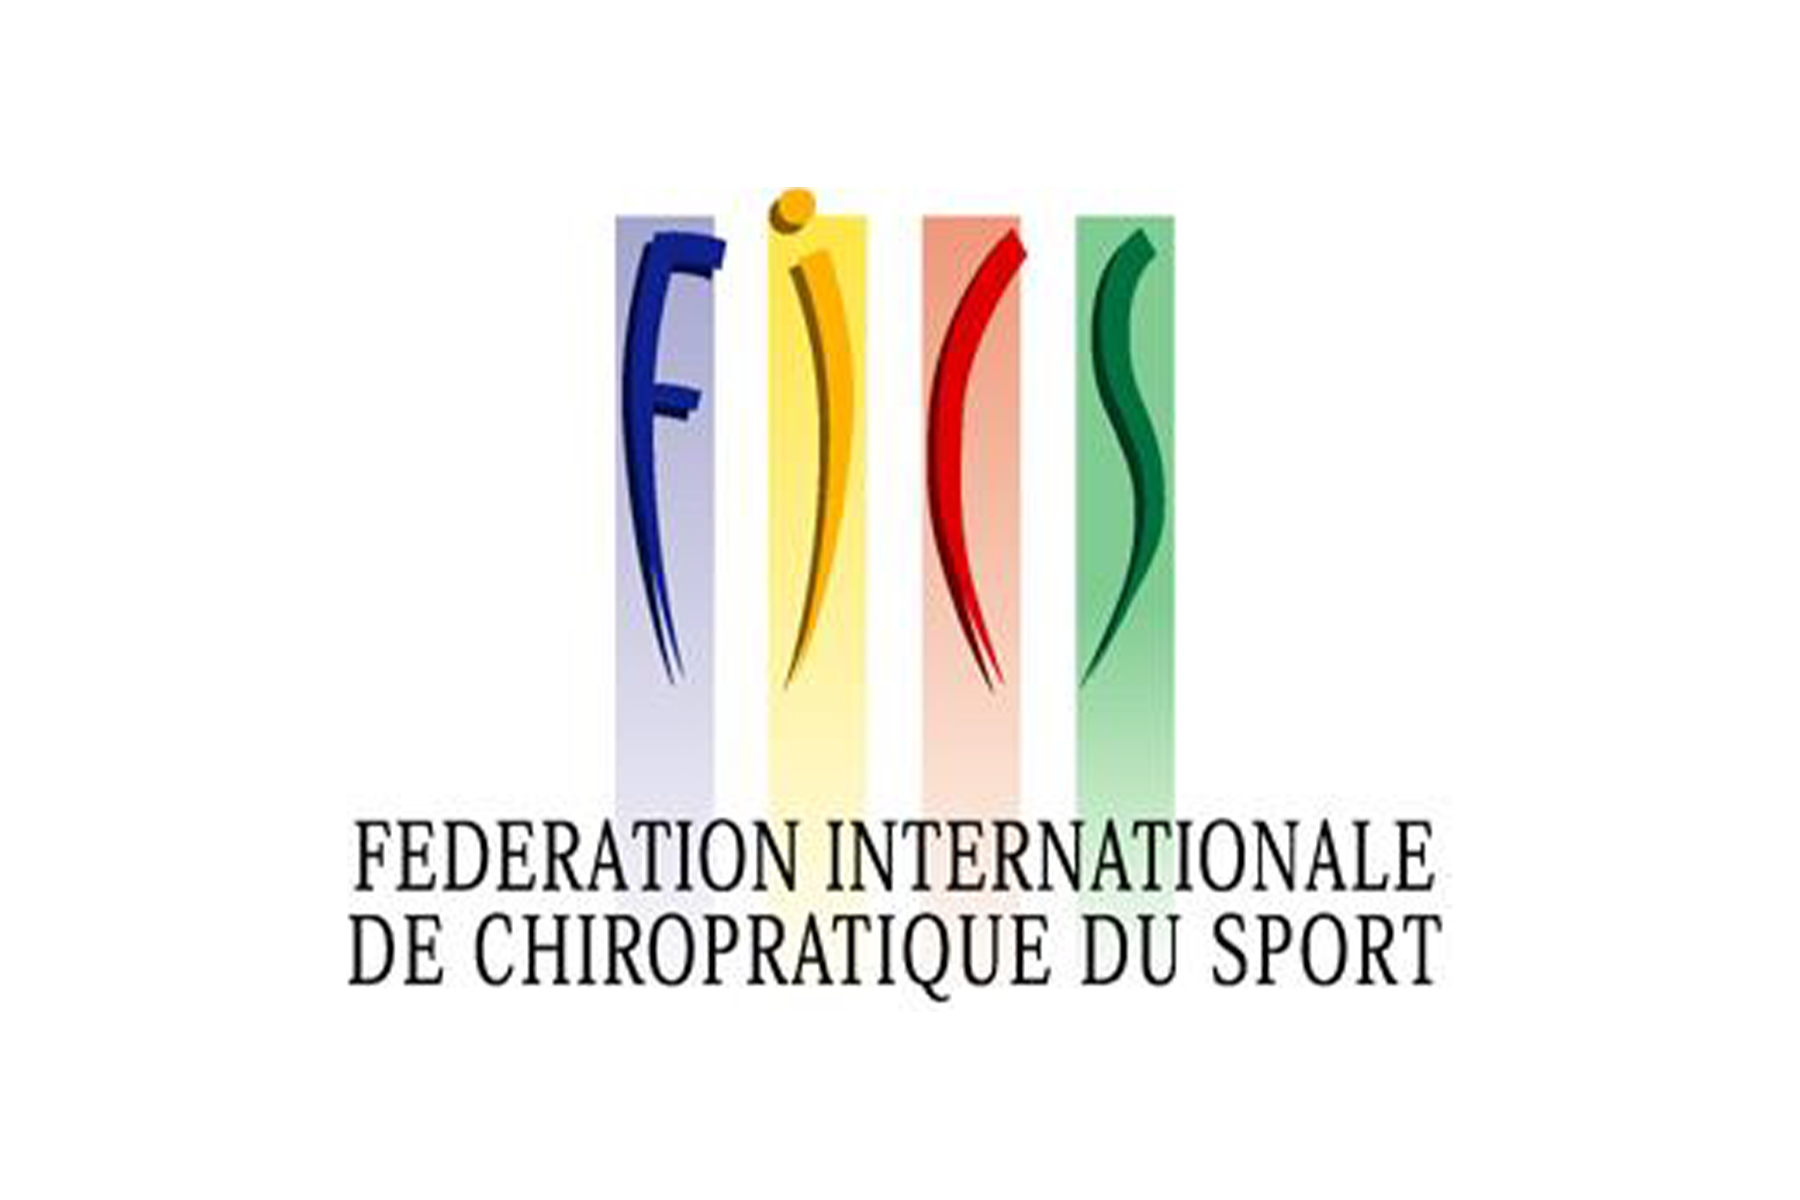 FICS - International Federation of Sports Chiropractic